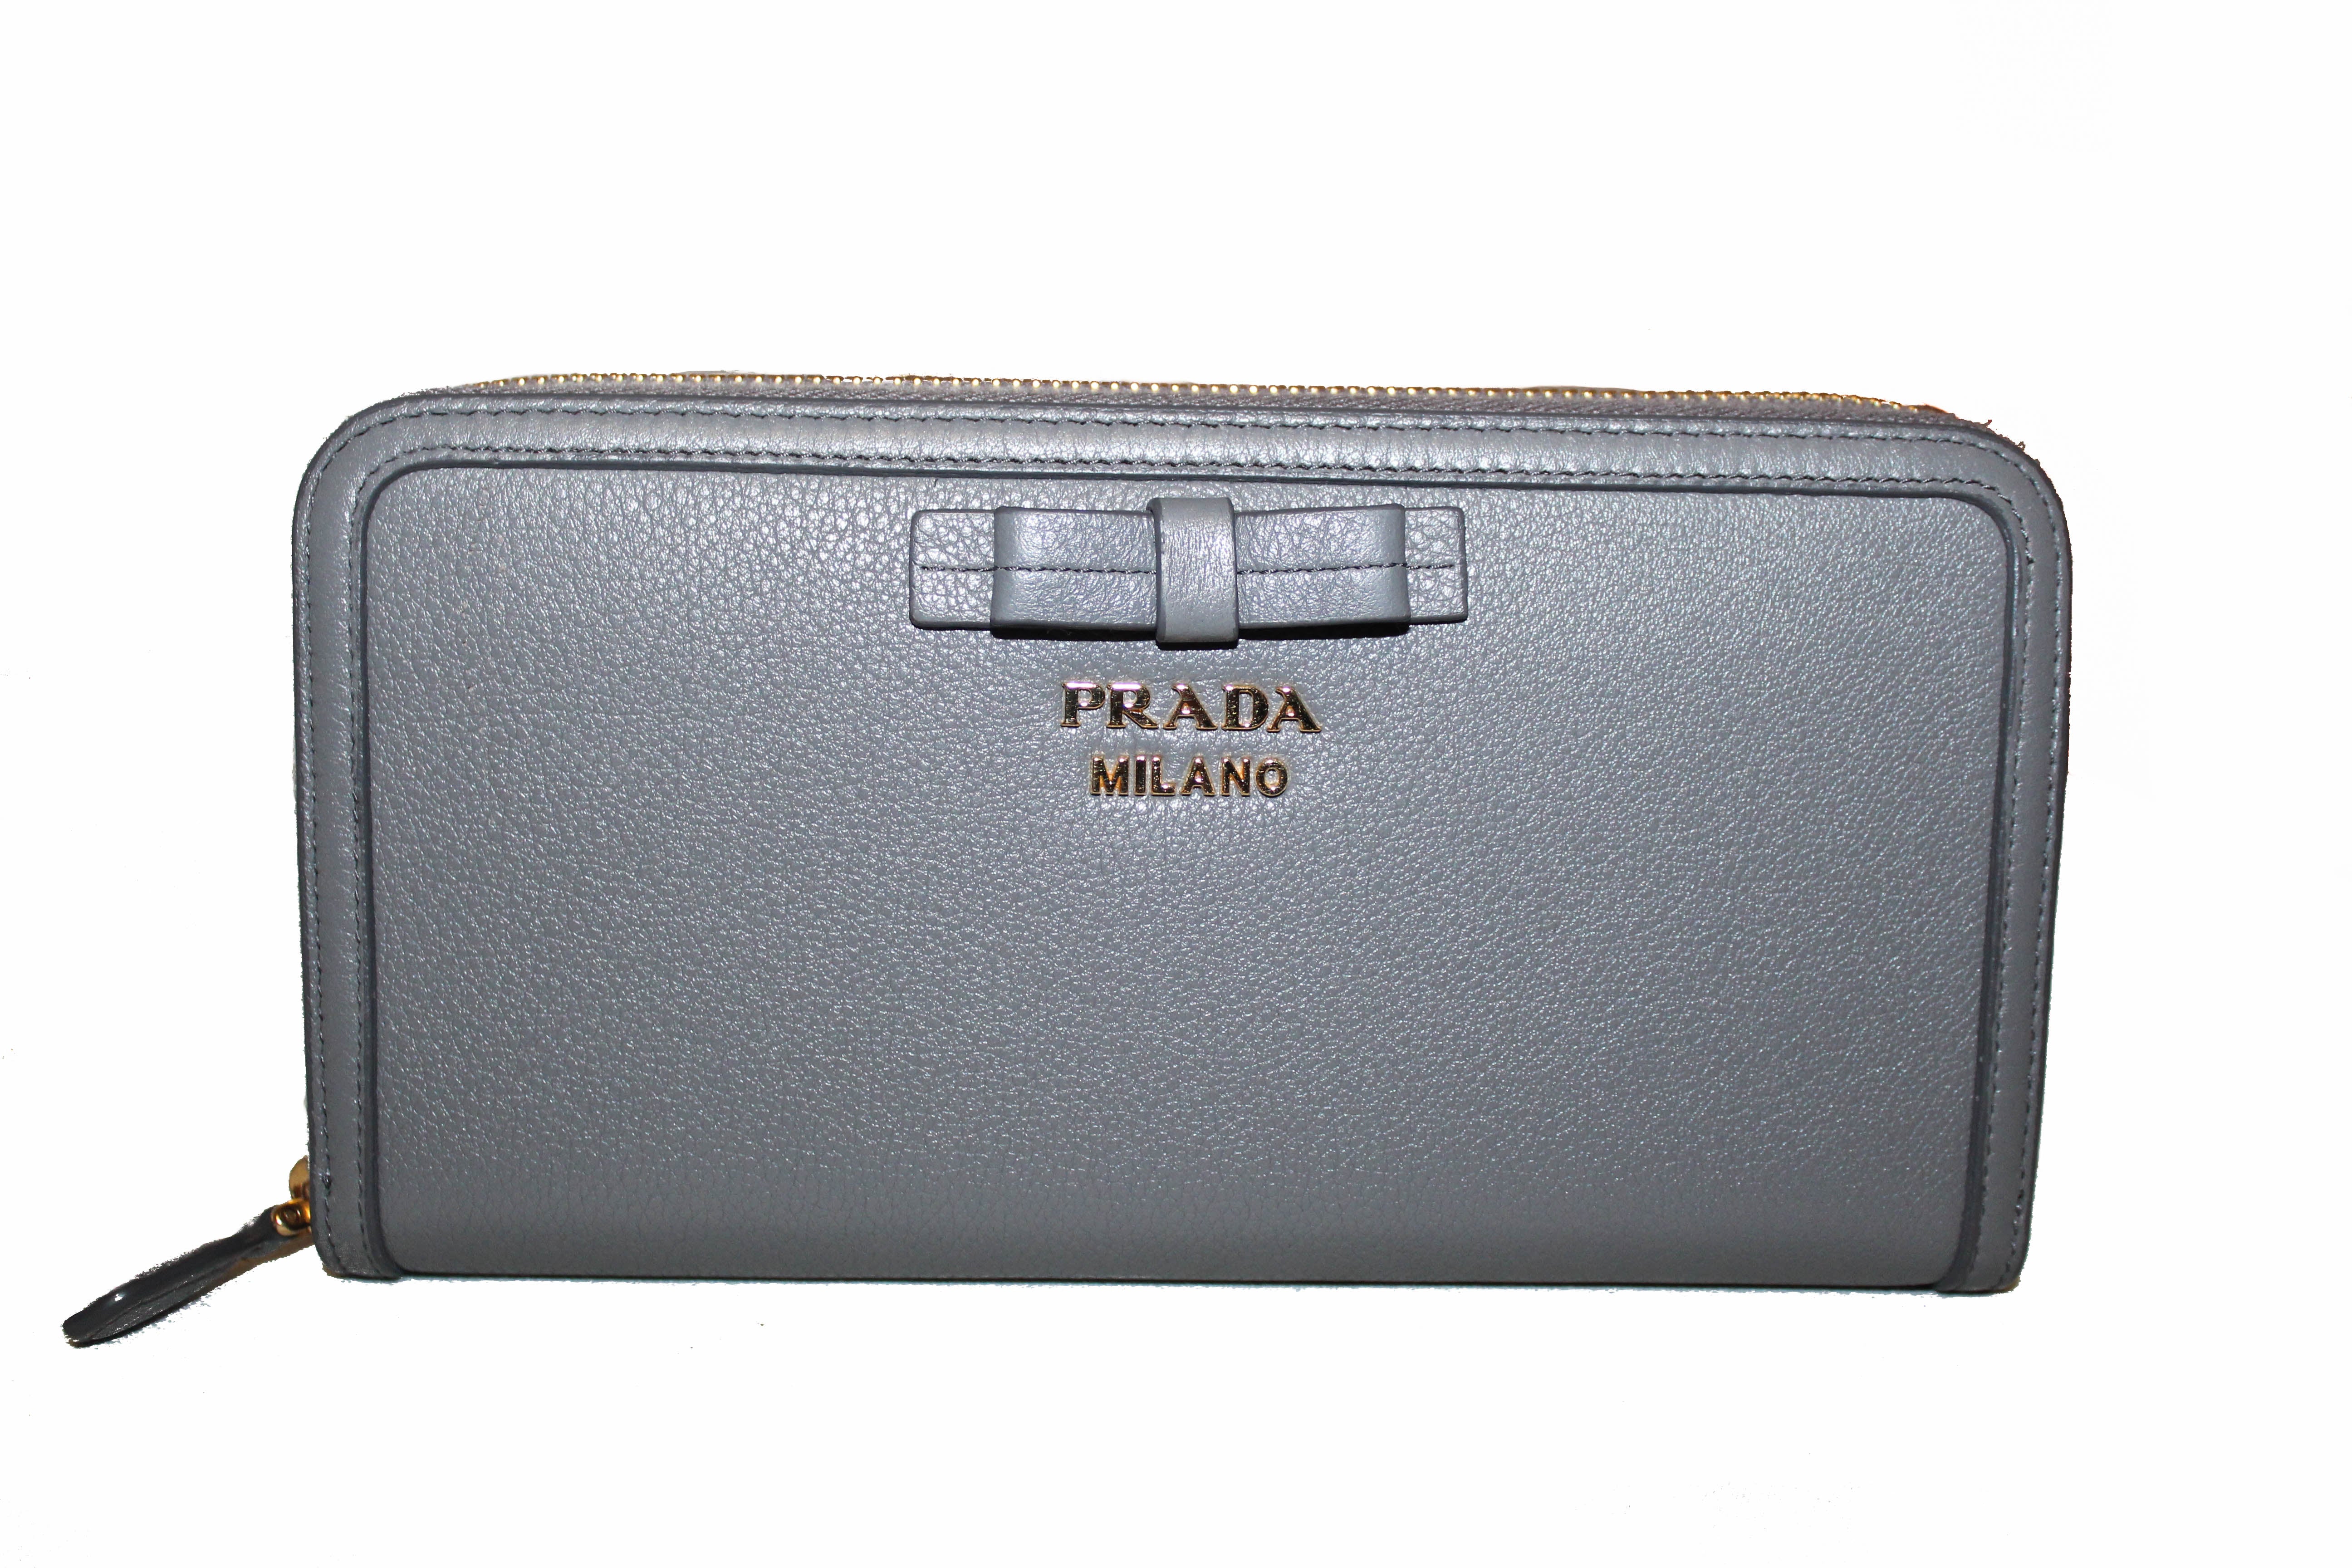 Authentic PRADA women's black leather wallet | eBay